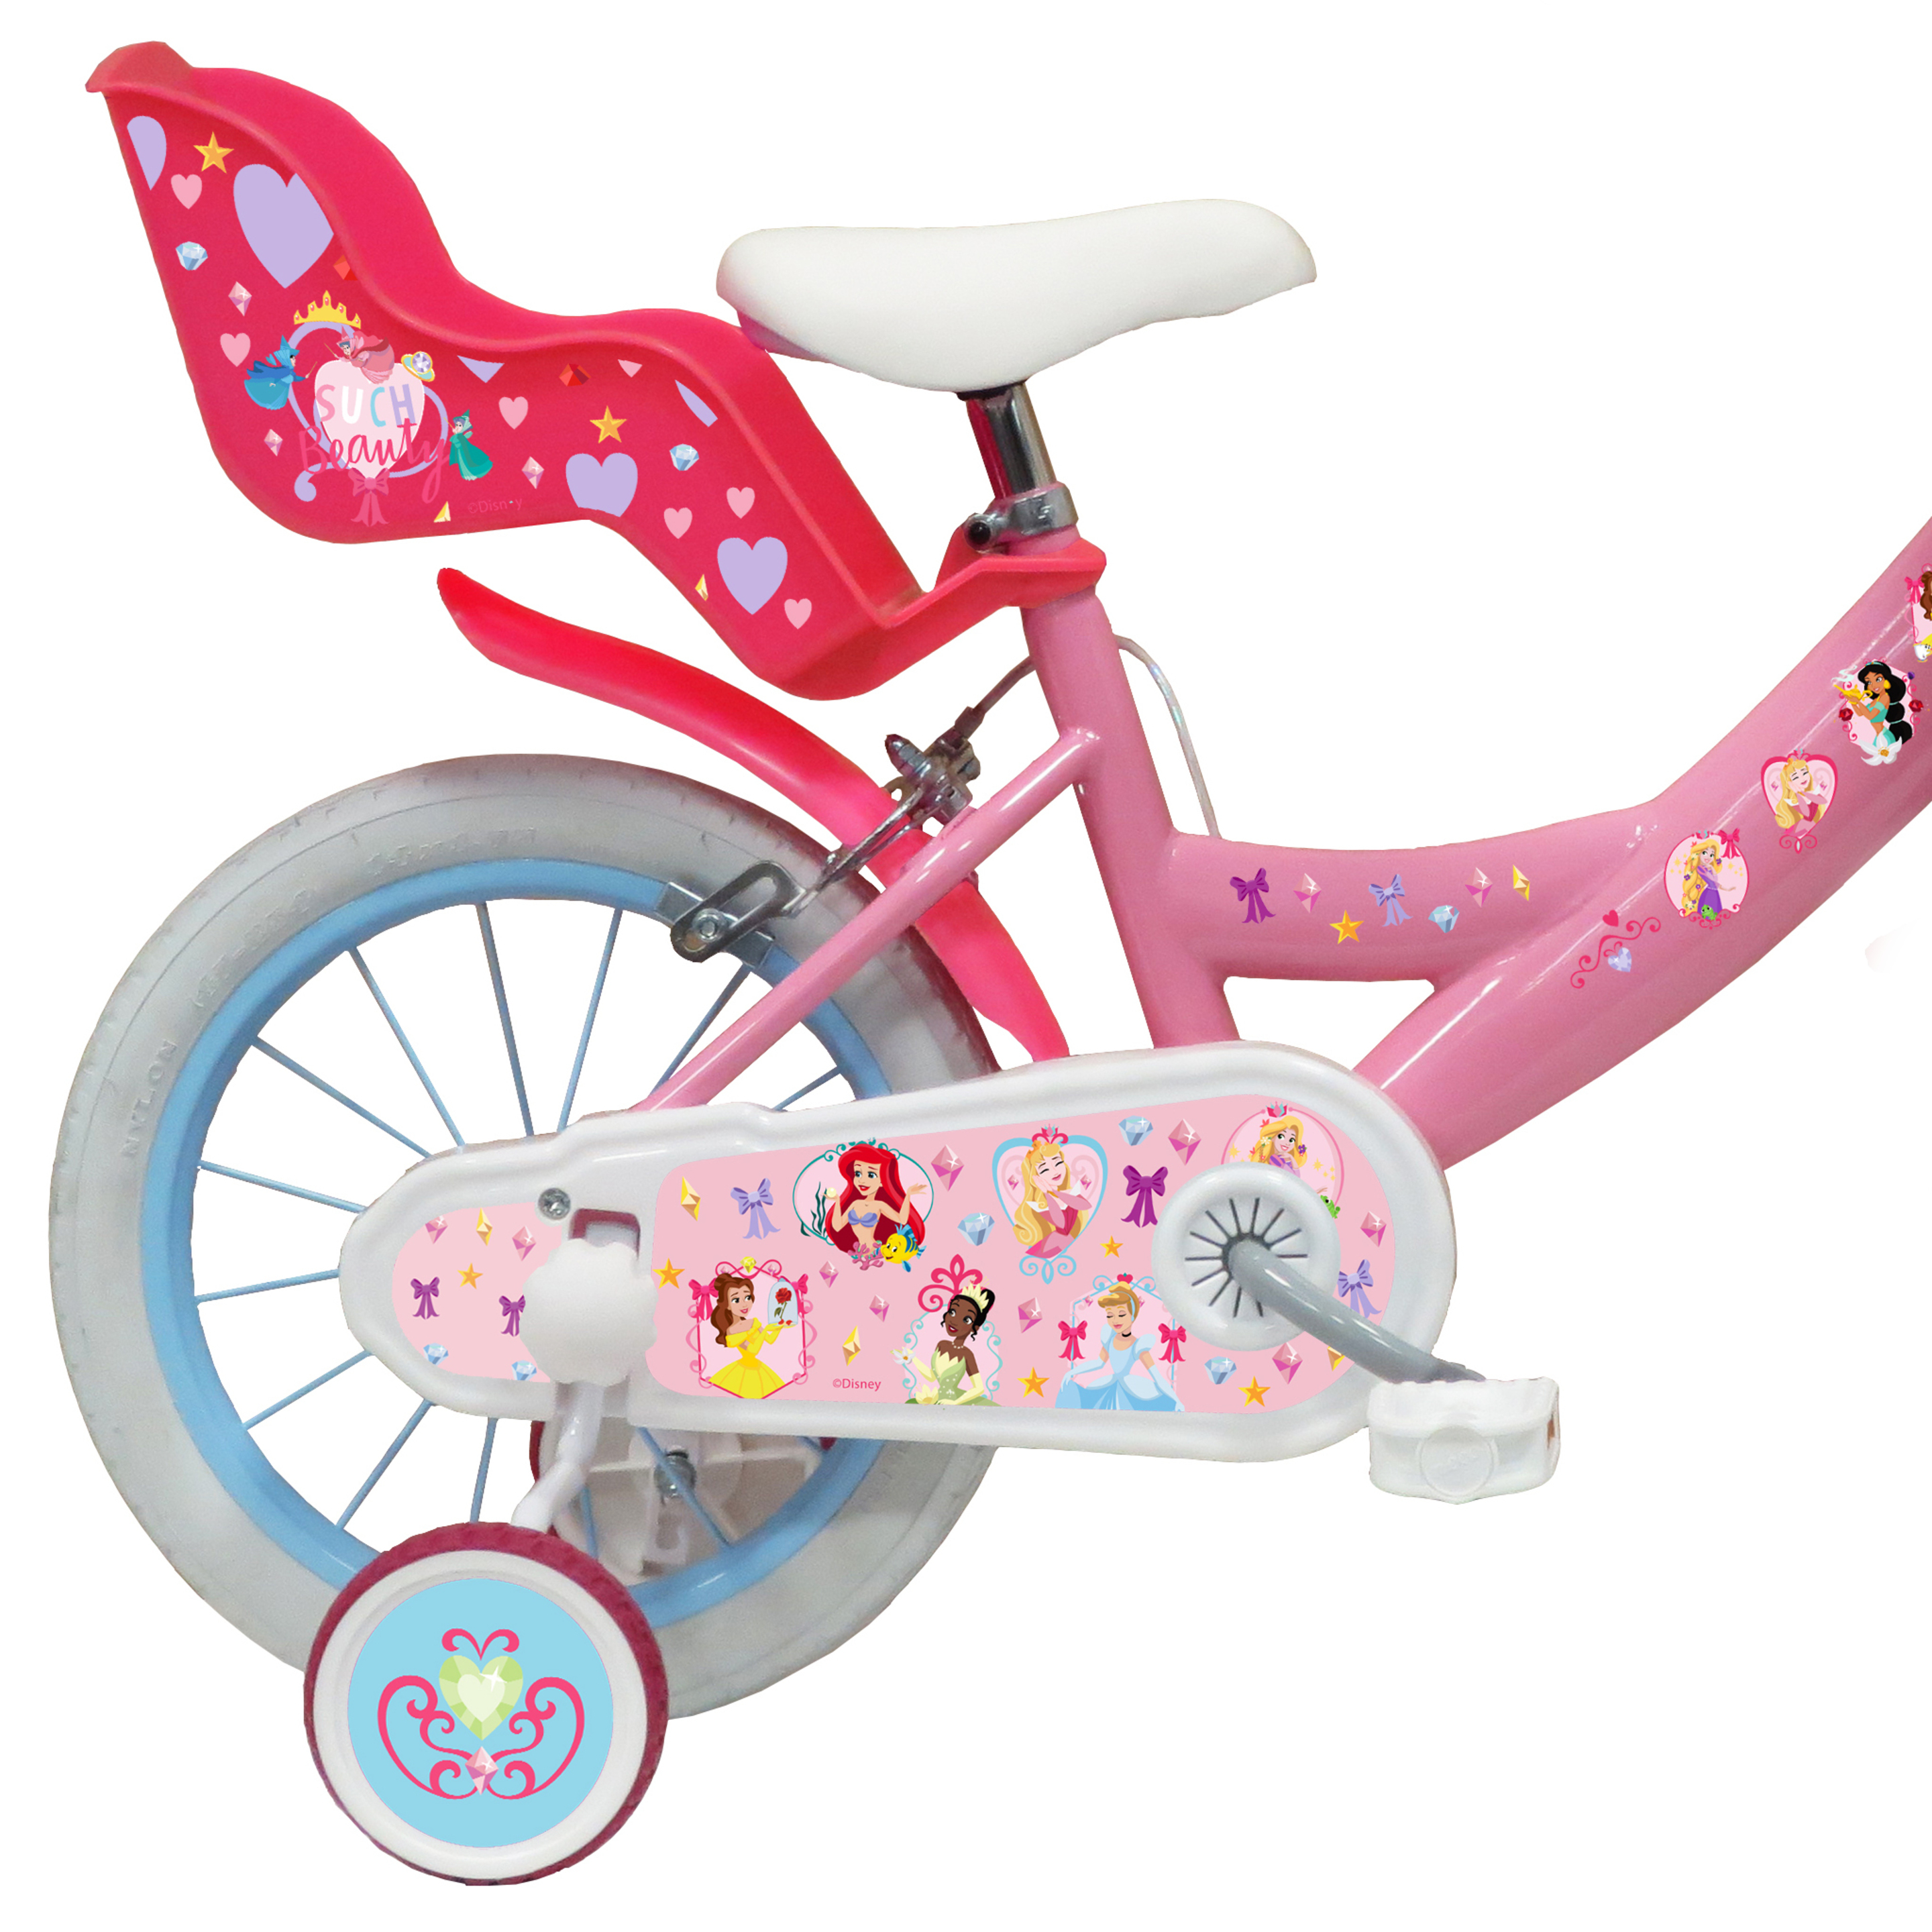 Bicicleta Niña 14 Pulgadas Disney Princess 4-6 Años